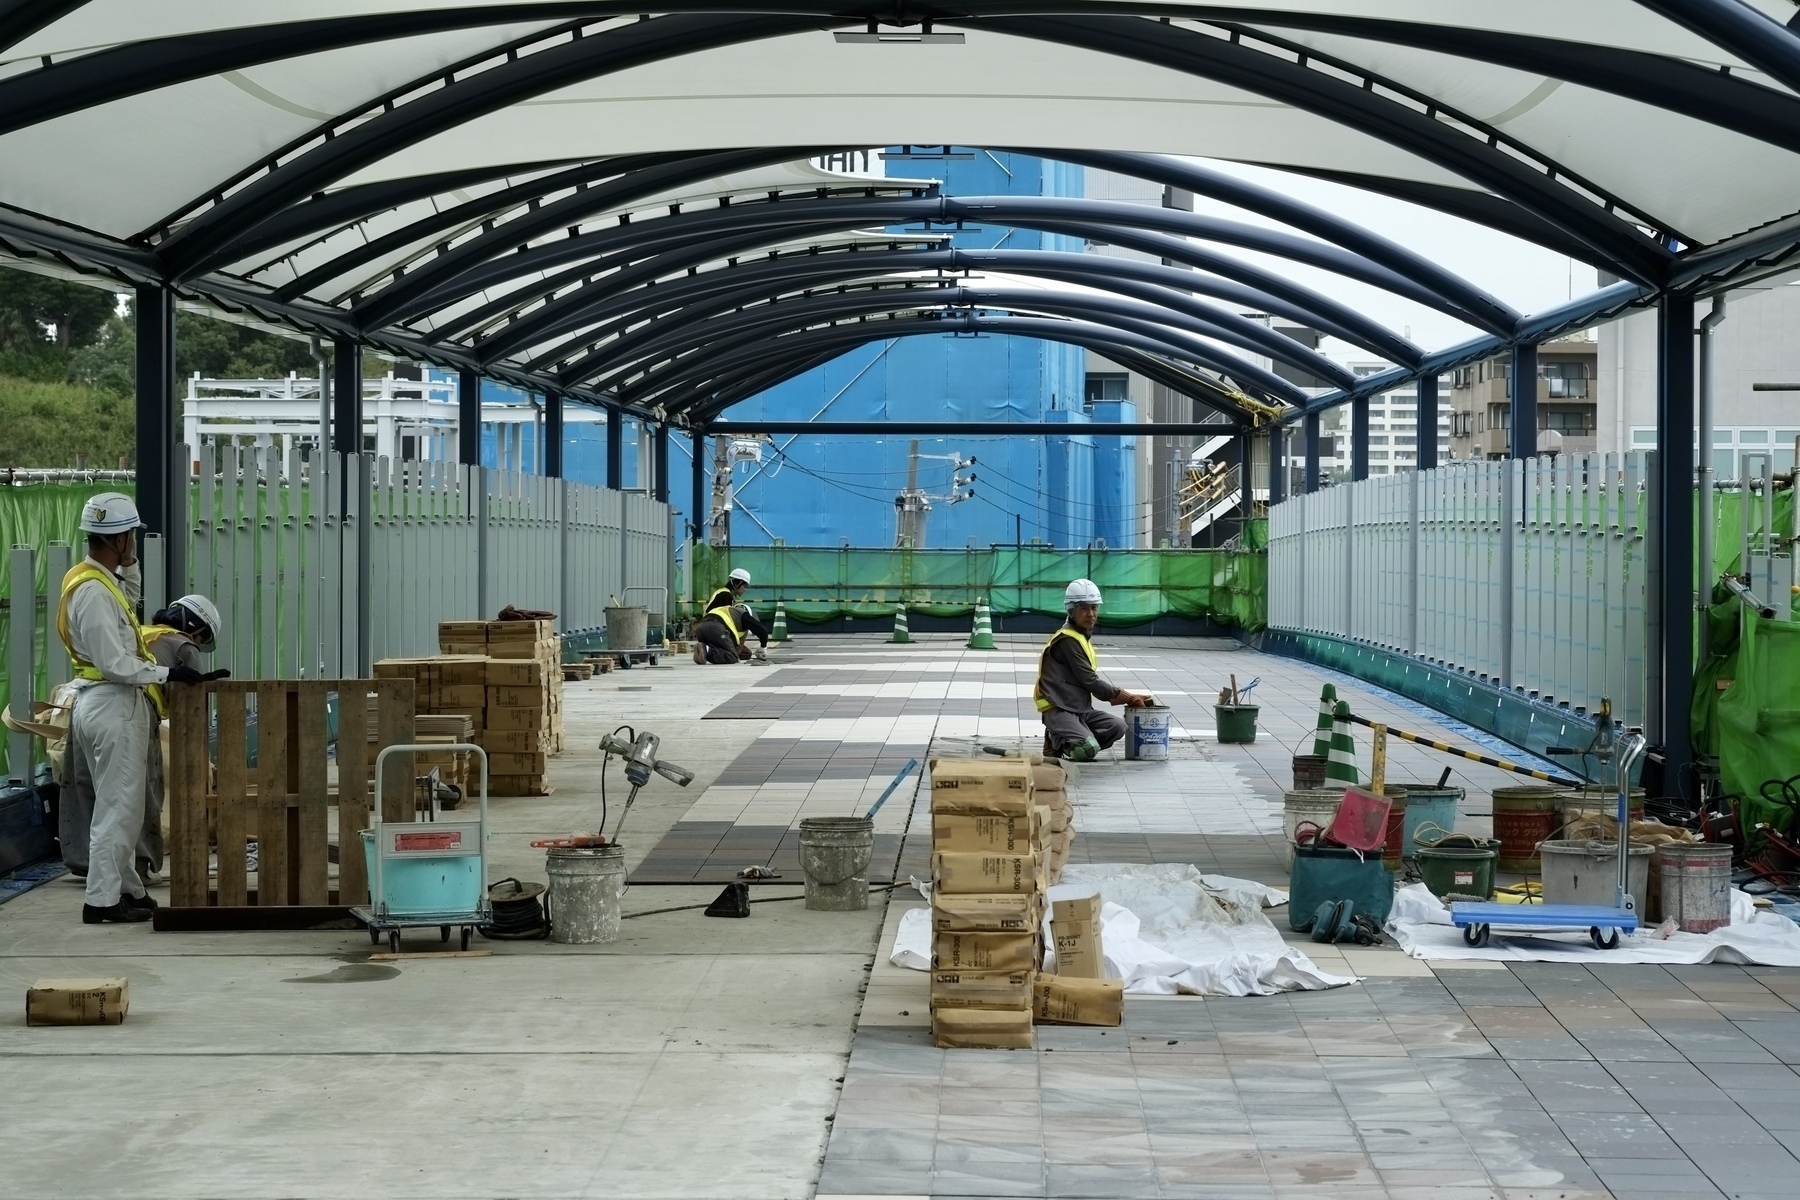 Construction workers finishing up the tiles on a footbridge across the tracks at JR Totsuka, Yokohama, Japan. 